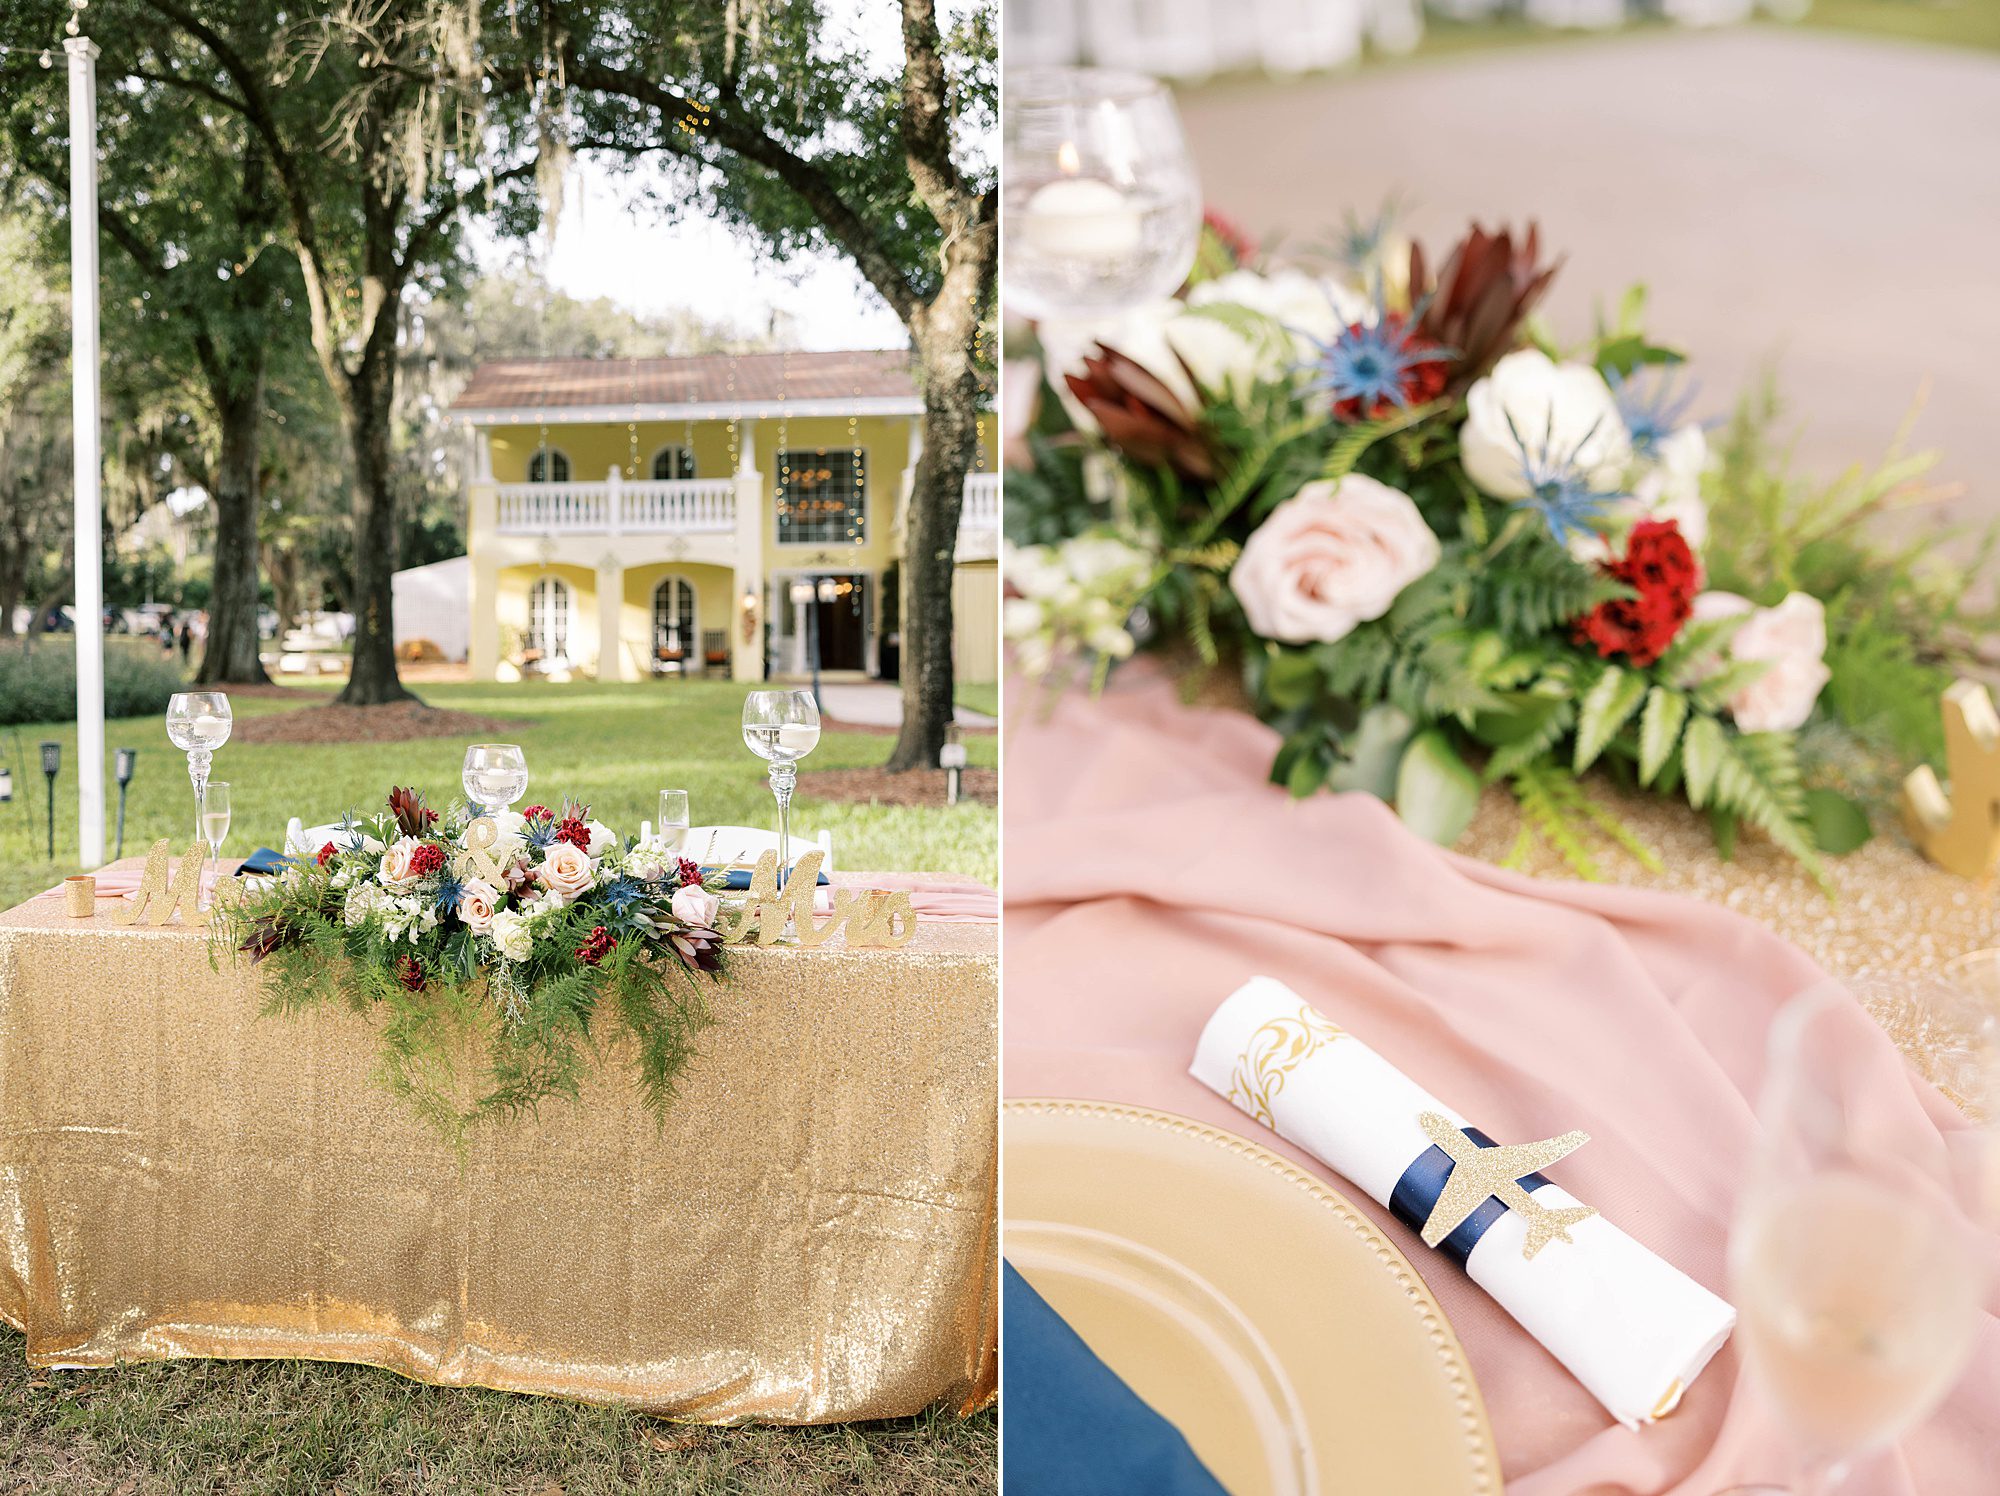 details for Casa Lantana wedding reception on lawn